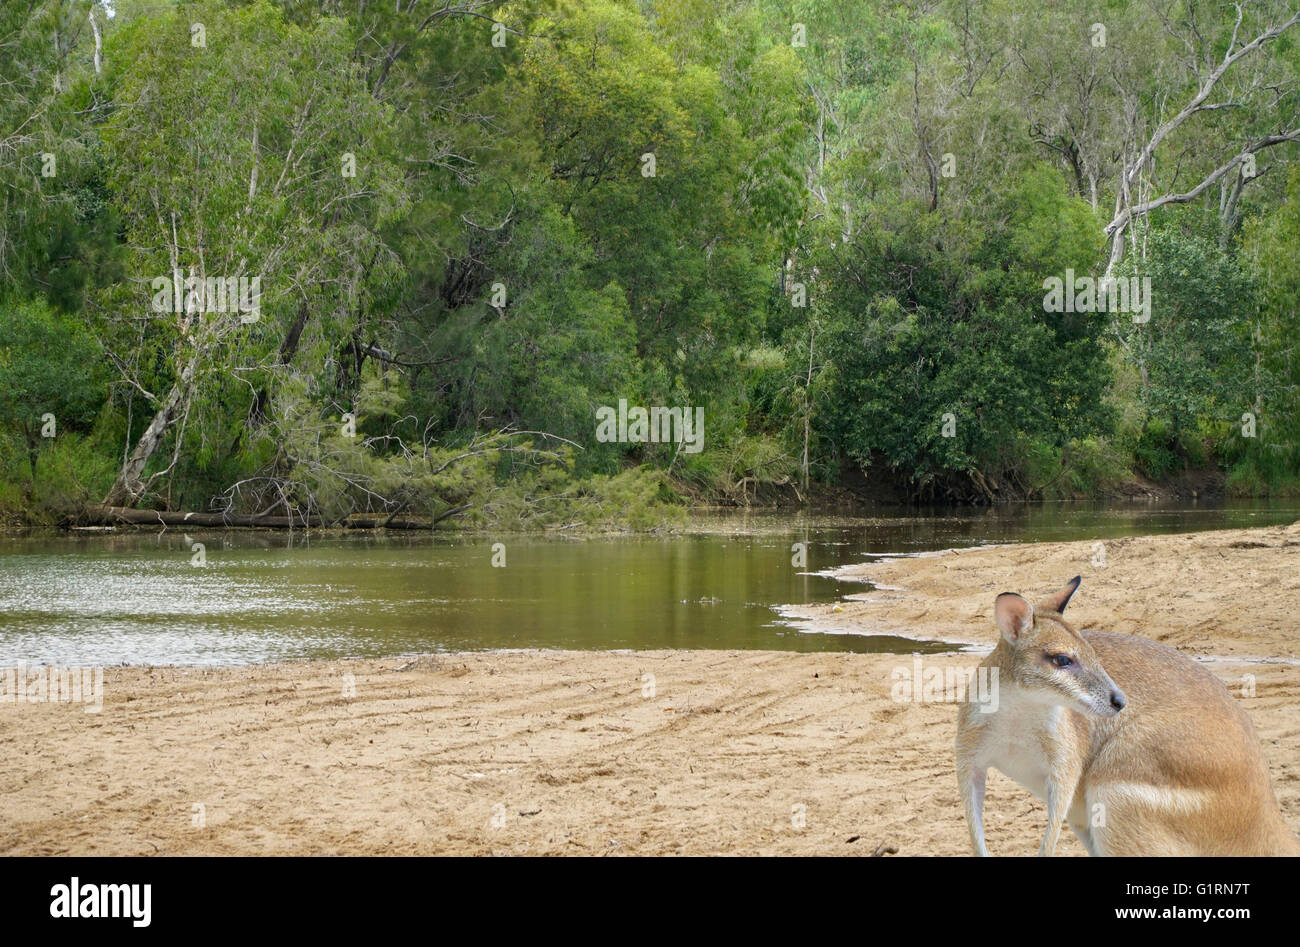 kangaroo by the creek in the Australian bush Stock Photo